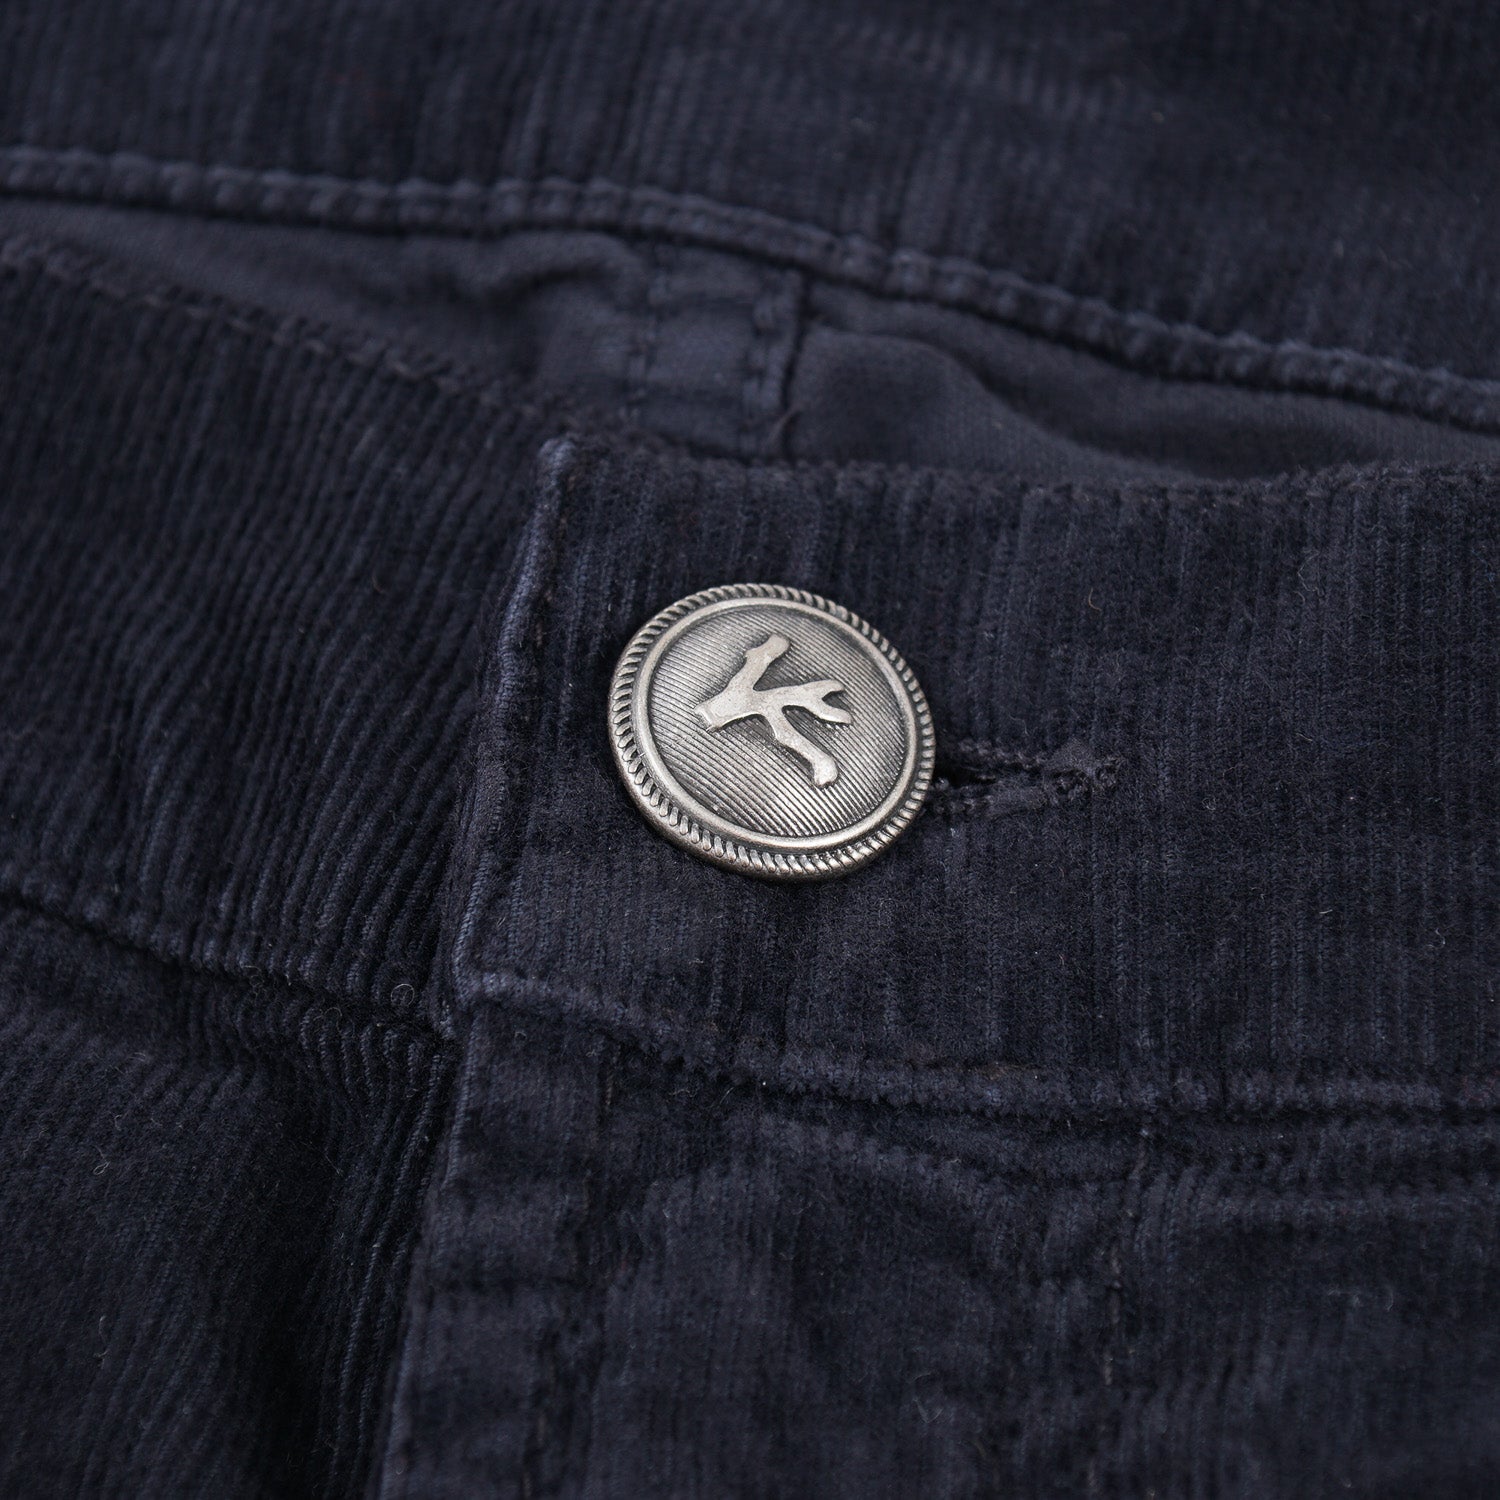 Isaia Slim 5-Pocket Corduroy Pants - Top Shelf Apparel